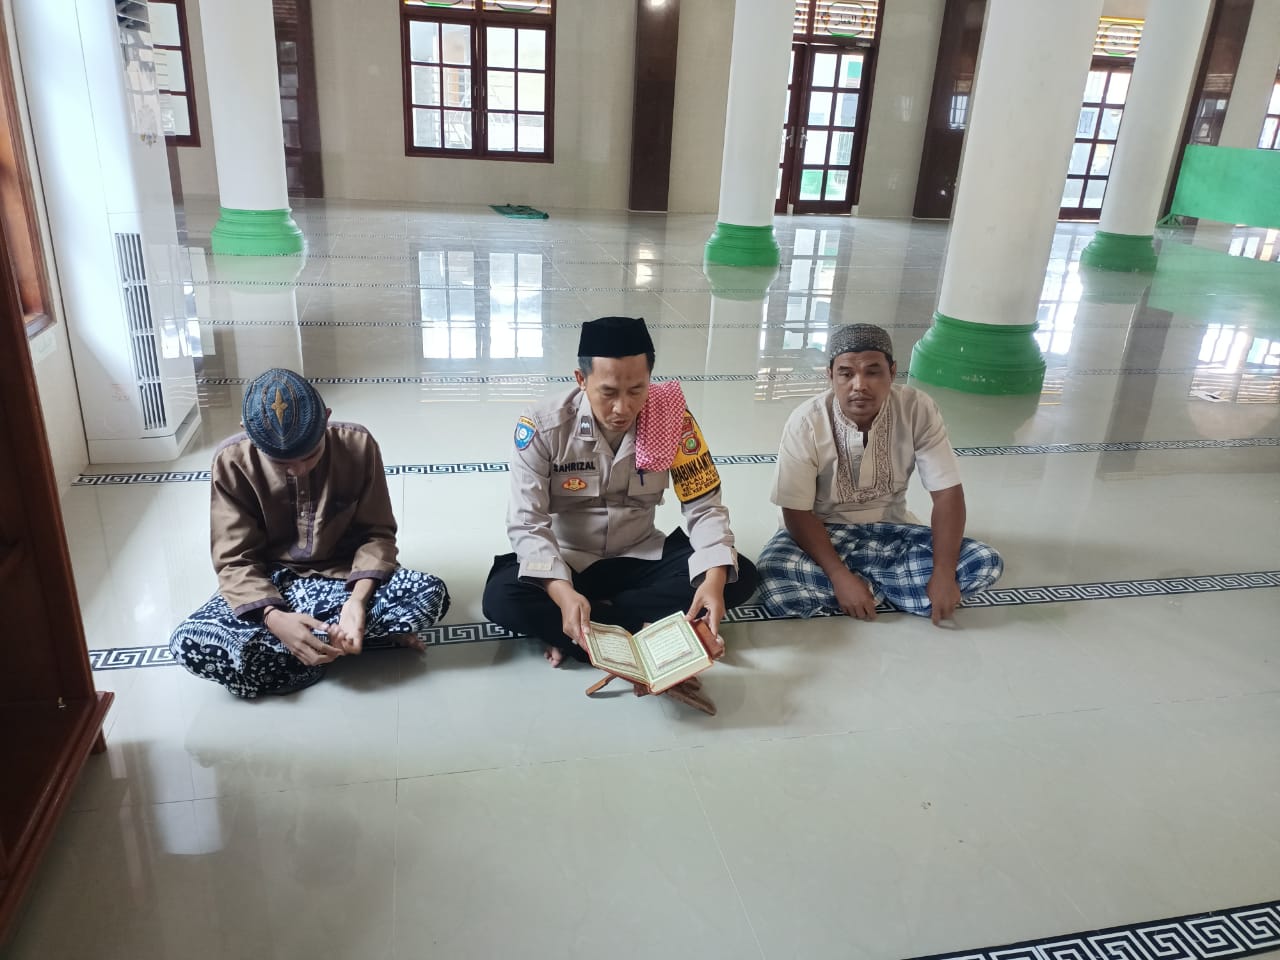 Bhabinkamtibmas Pulau Kelapa Menggalang Kekuatan Iman dan Silaturahmi di Bulan Suci Ramadhan